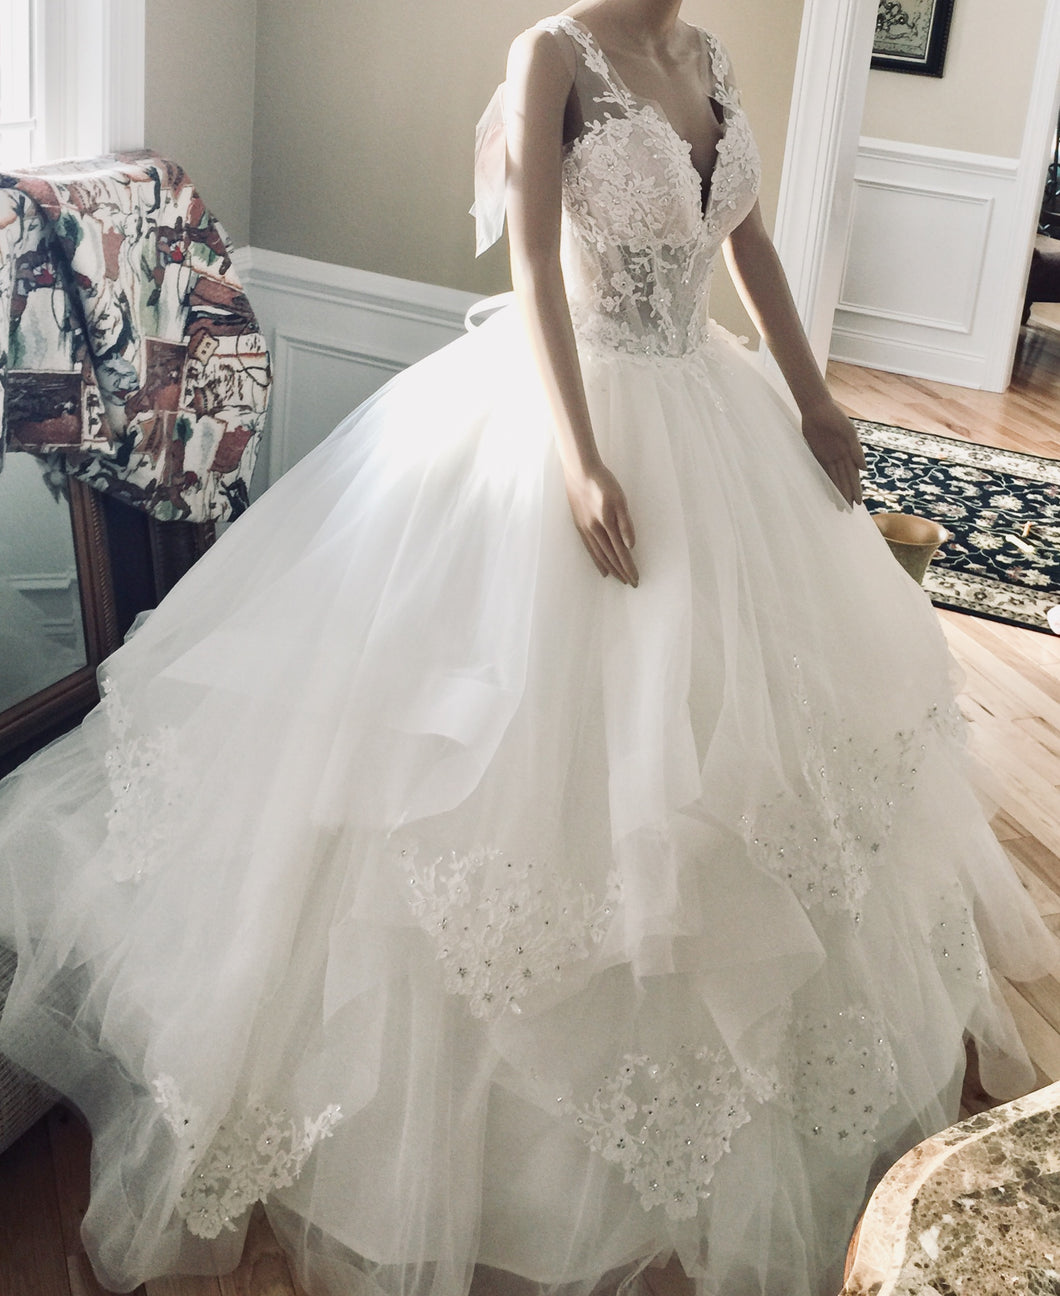 Pnina Tornai 'Love' size 12 new wedding dress side view on bride